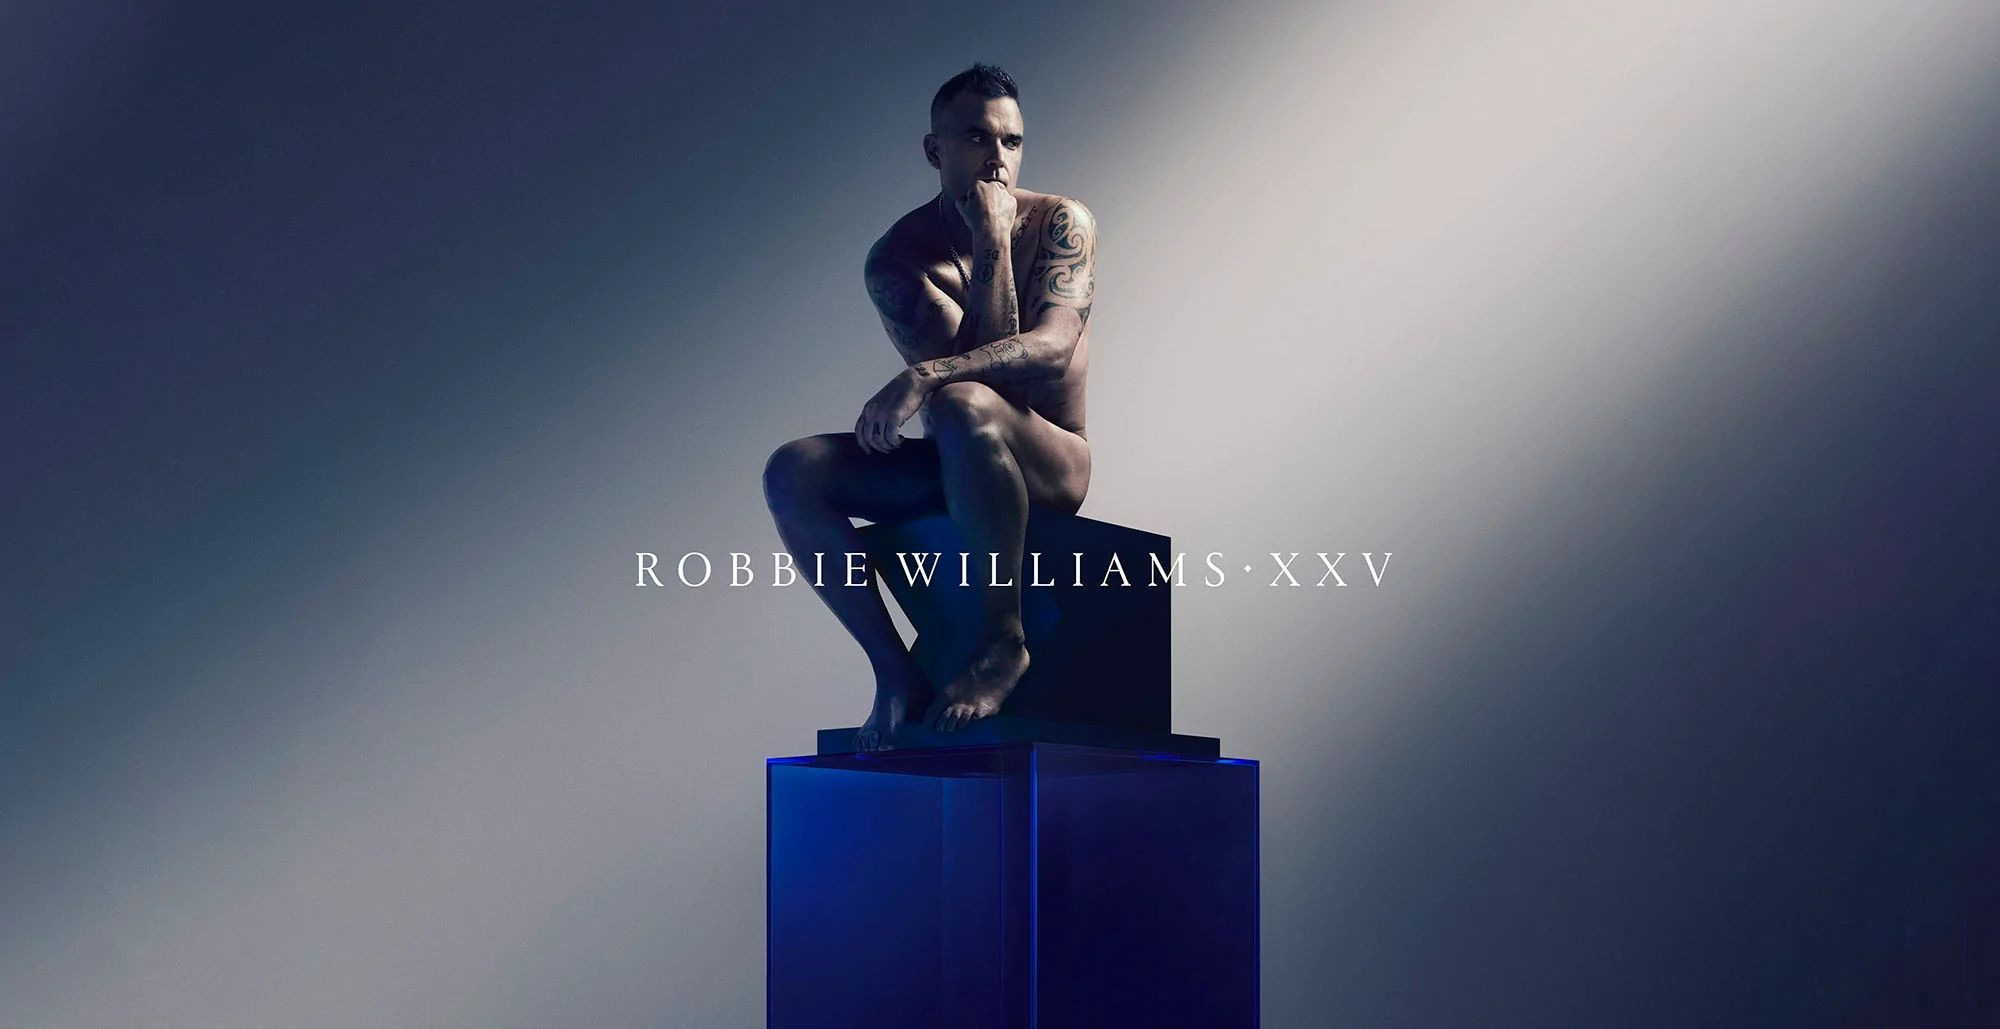 Imagen promocional de la gira de Robbie Williams, que pasará por Barcelona / ROBBIEWILLIAMS.COM